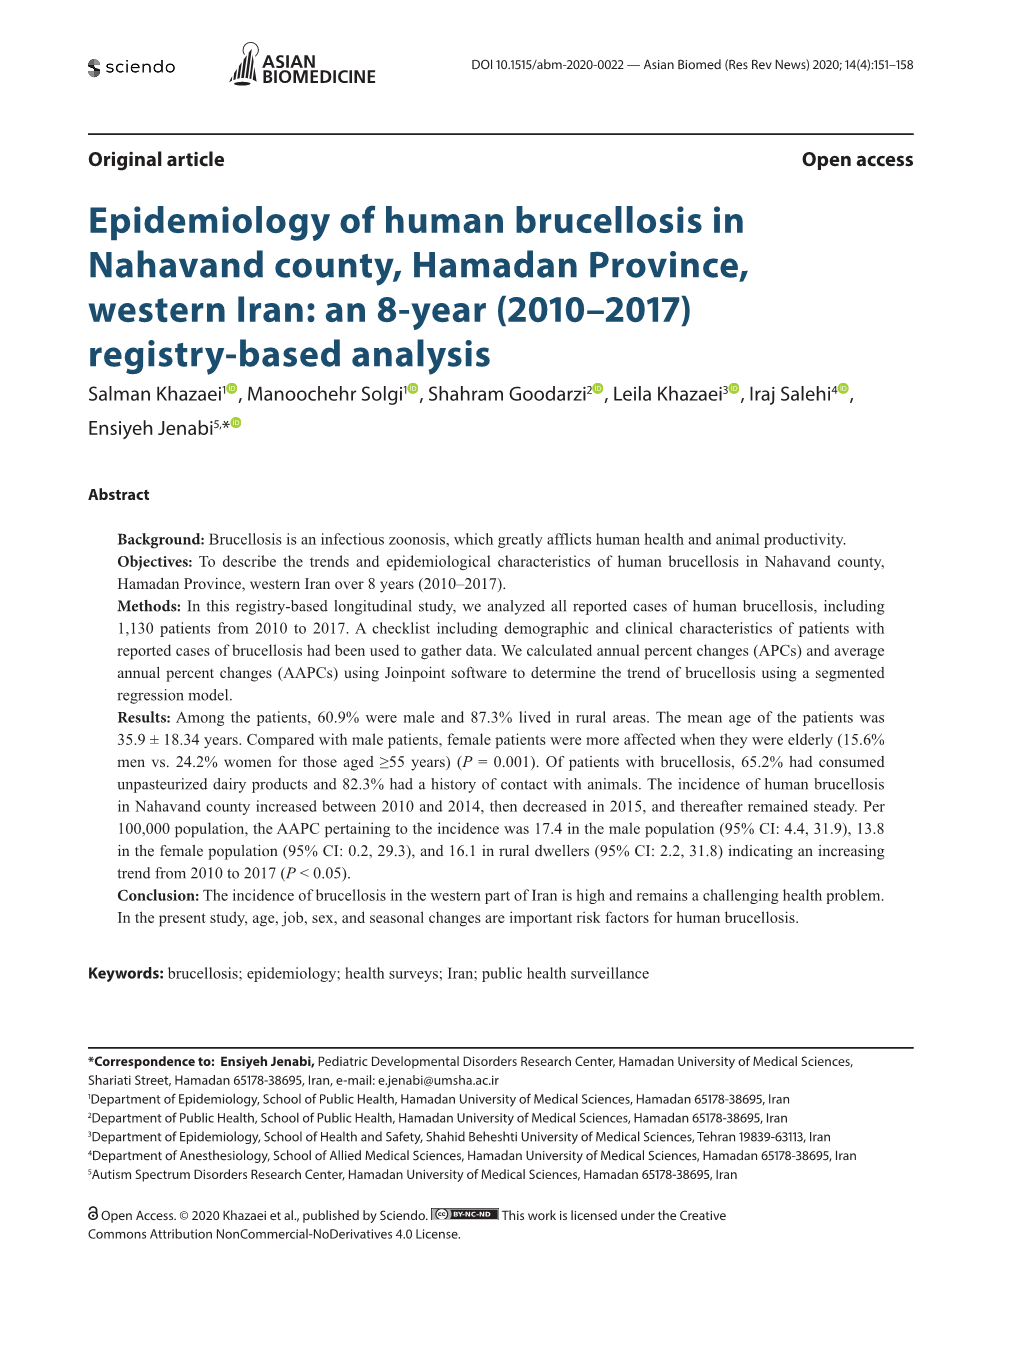 Epidemiology of Human Brucellosis in Nahavand County, Hamadan